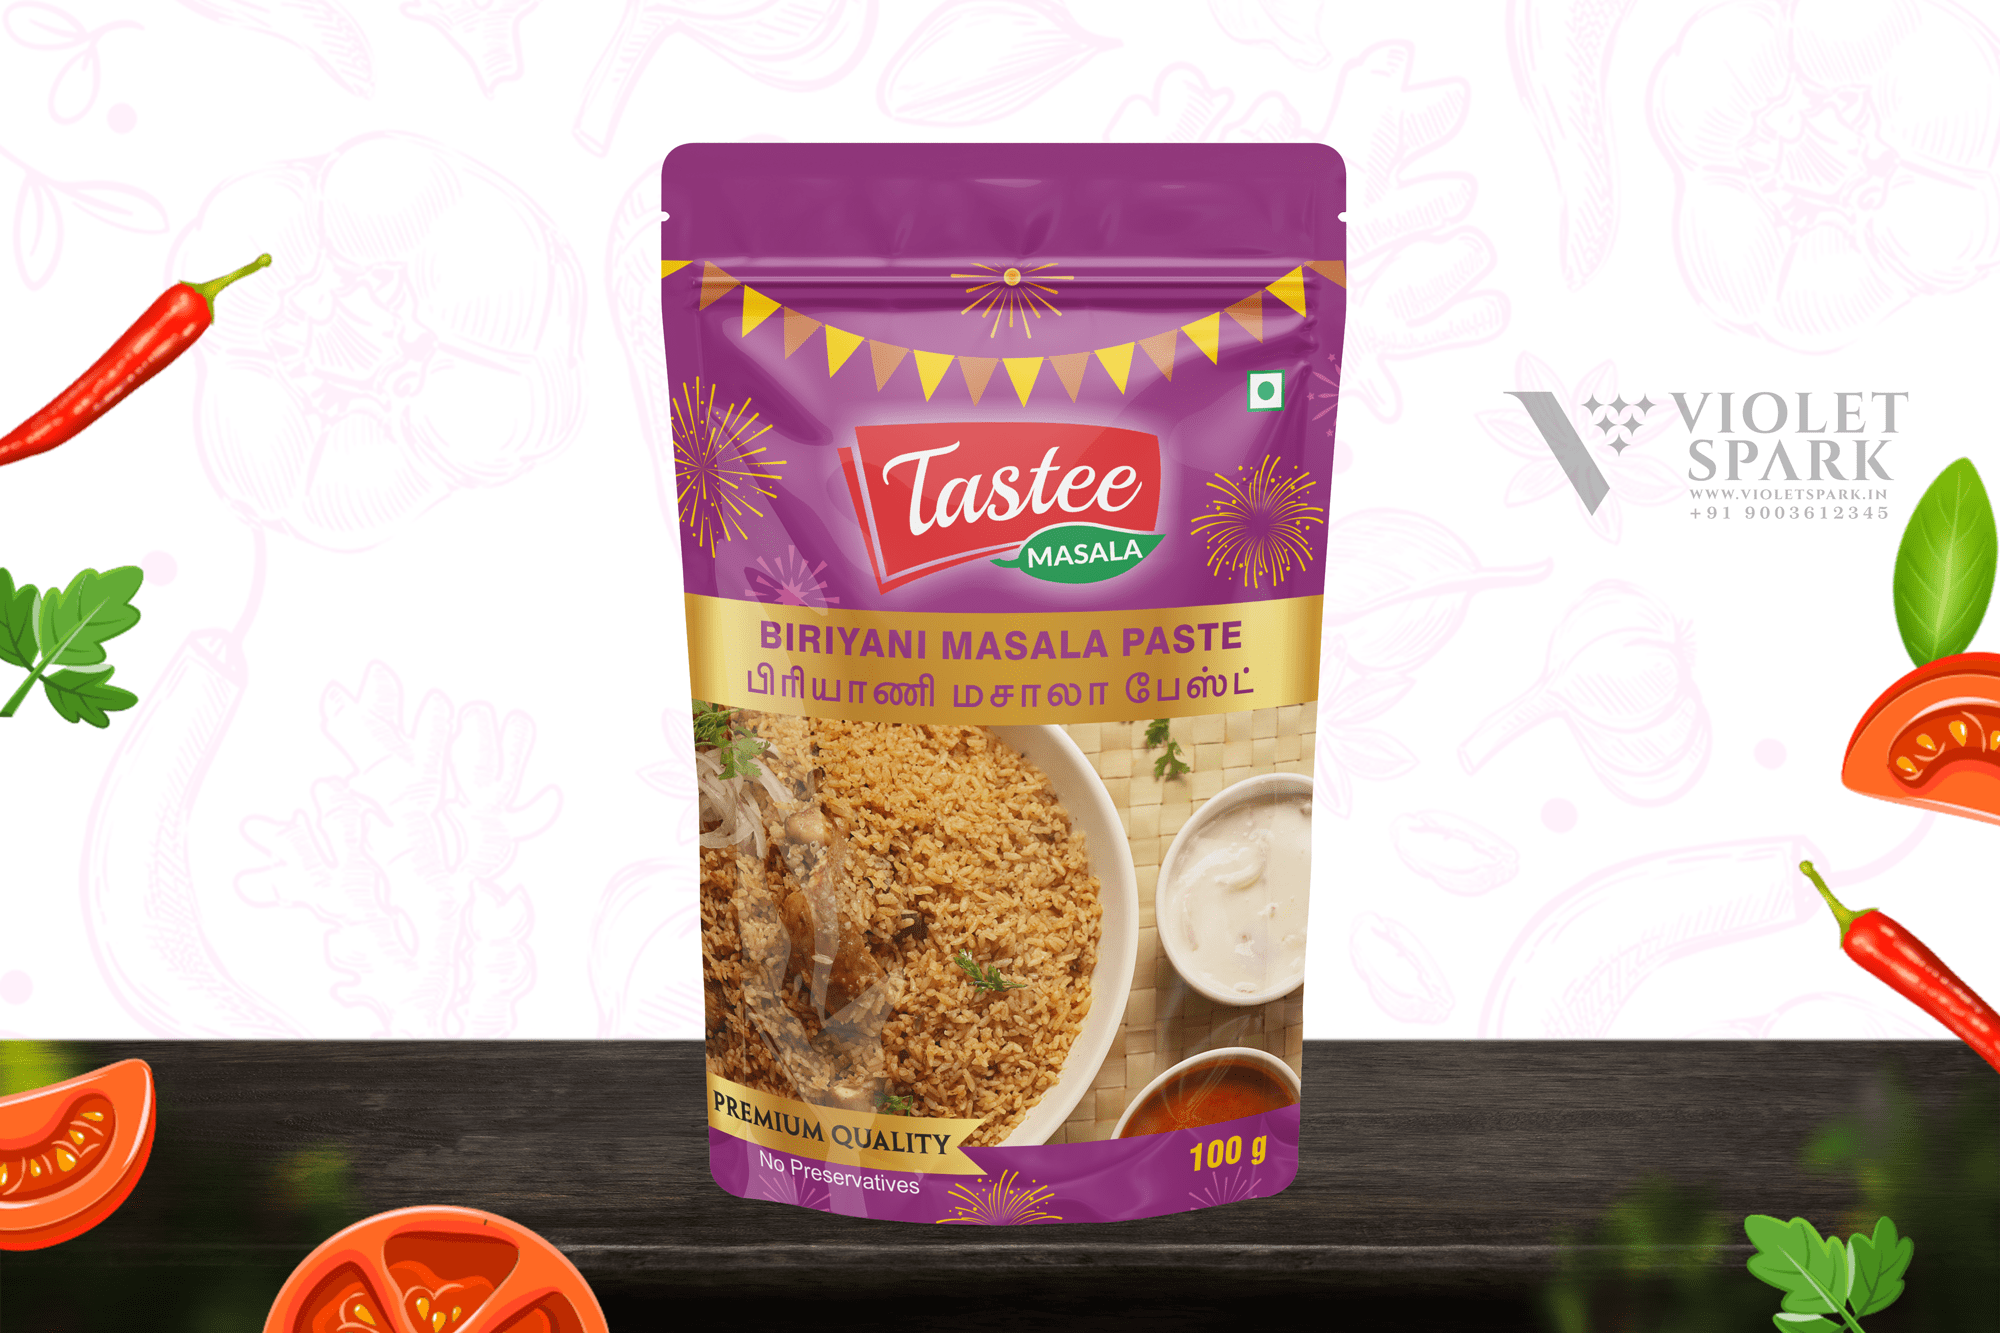 Tastee Masala Brands Biriyani Masala Paste Branding and Packaging Design in Coimbatore by Creative Prints thecreativeprints